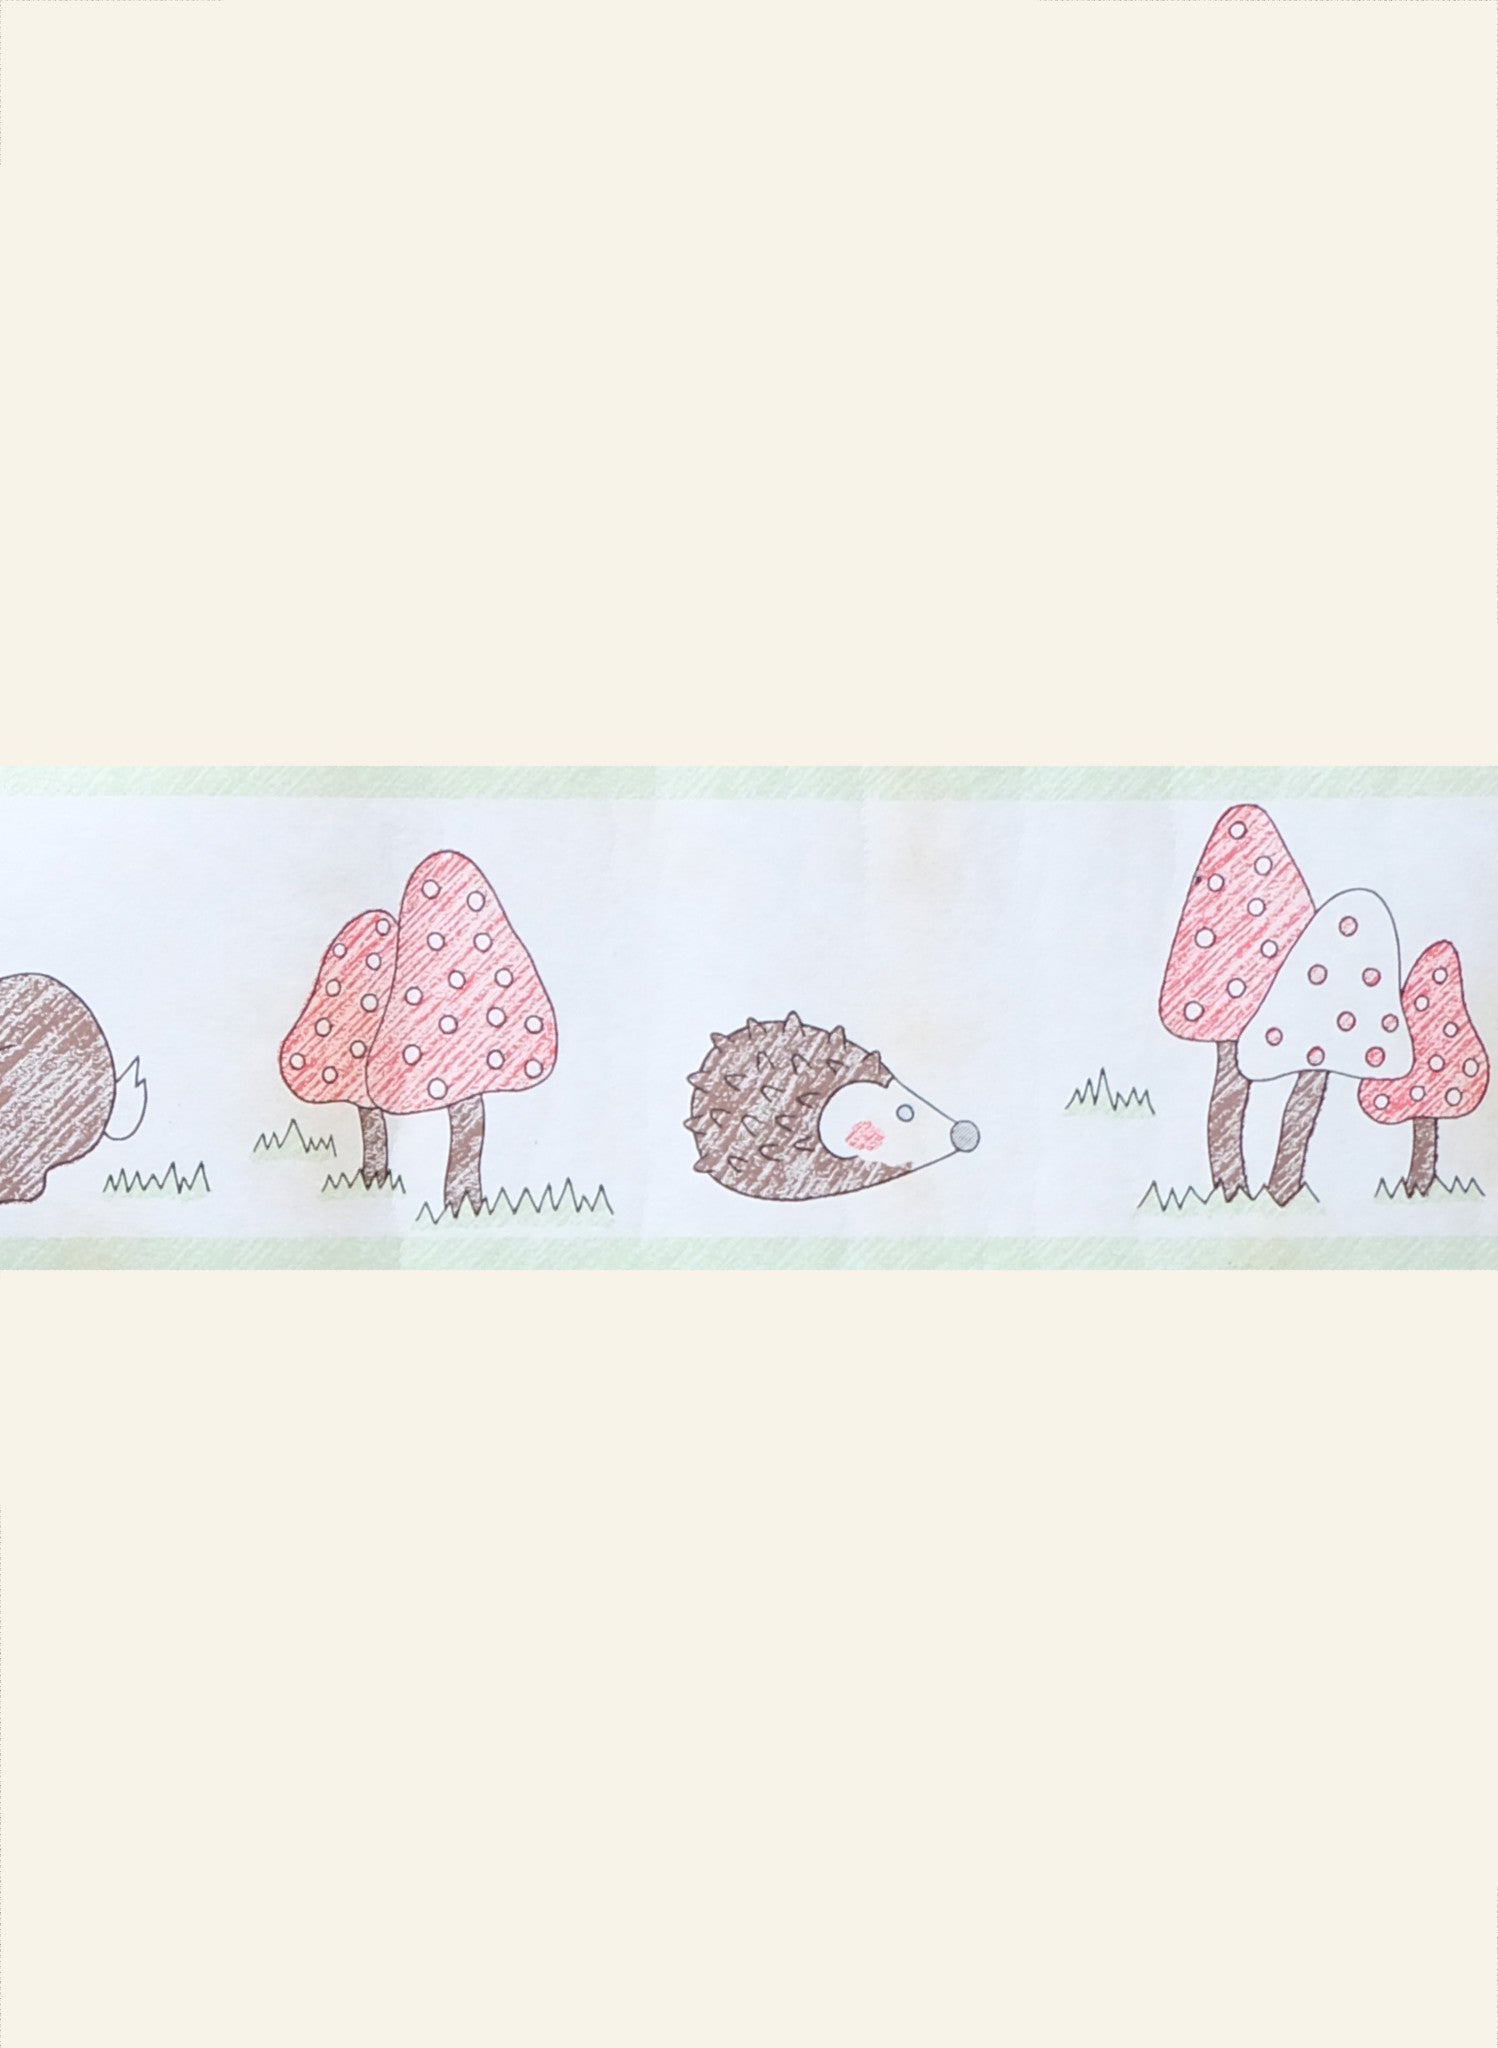 Poppy - Small Mole and Hedgehog - Wallpaper Border - 10m